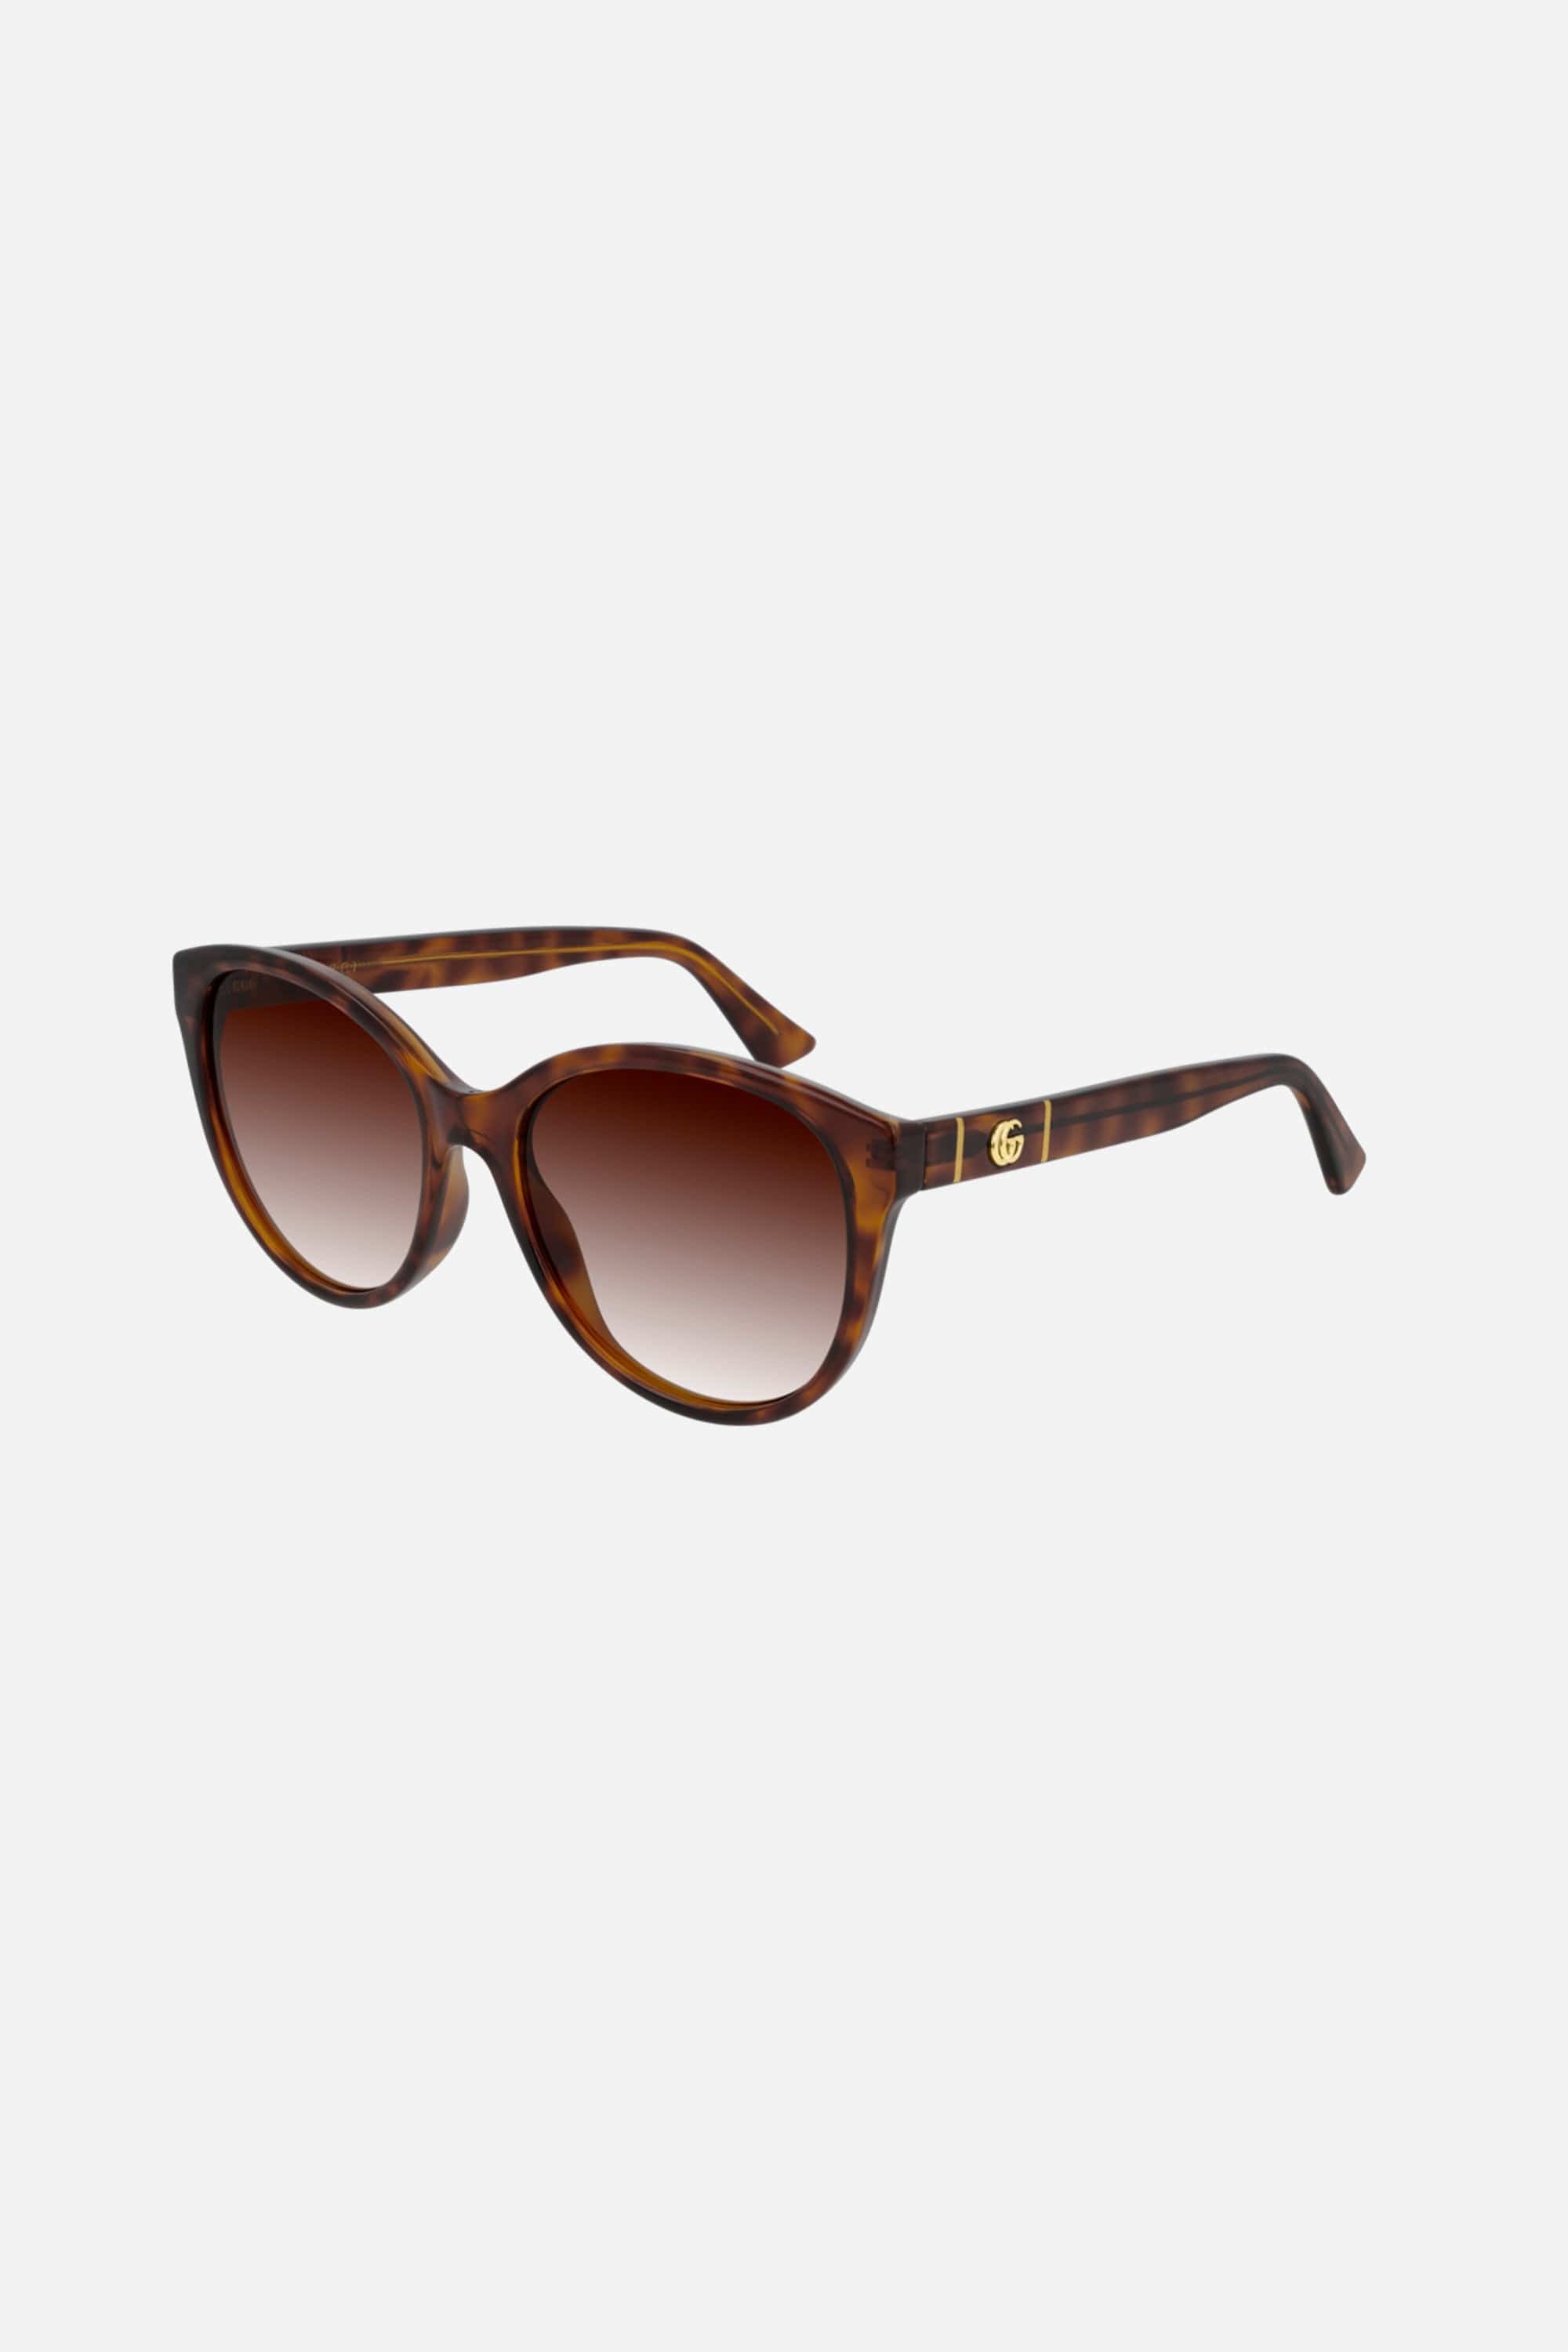 Gucci soft cat-eye femenine havana sunglasses - Eyewear Club